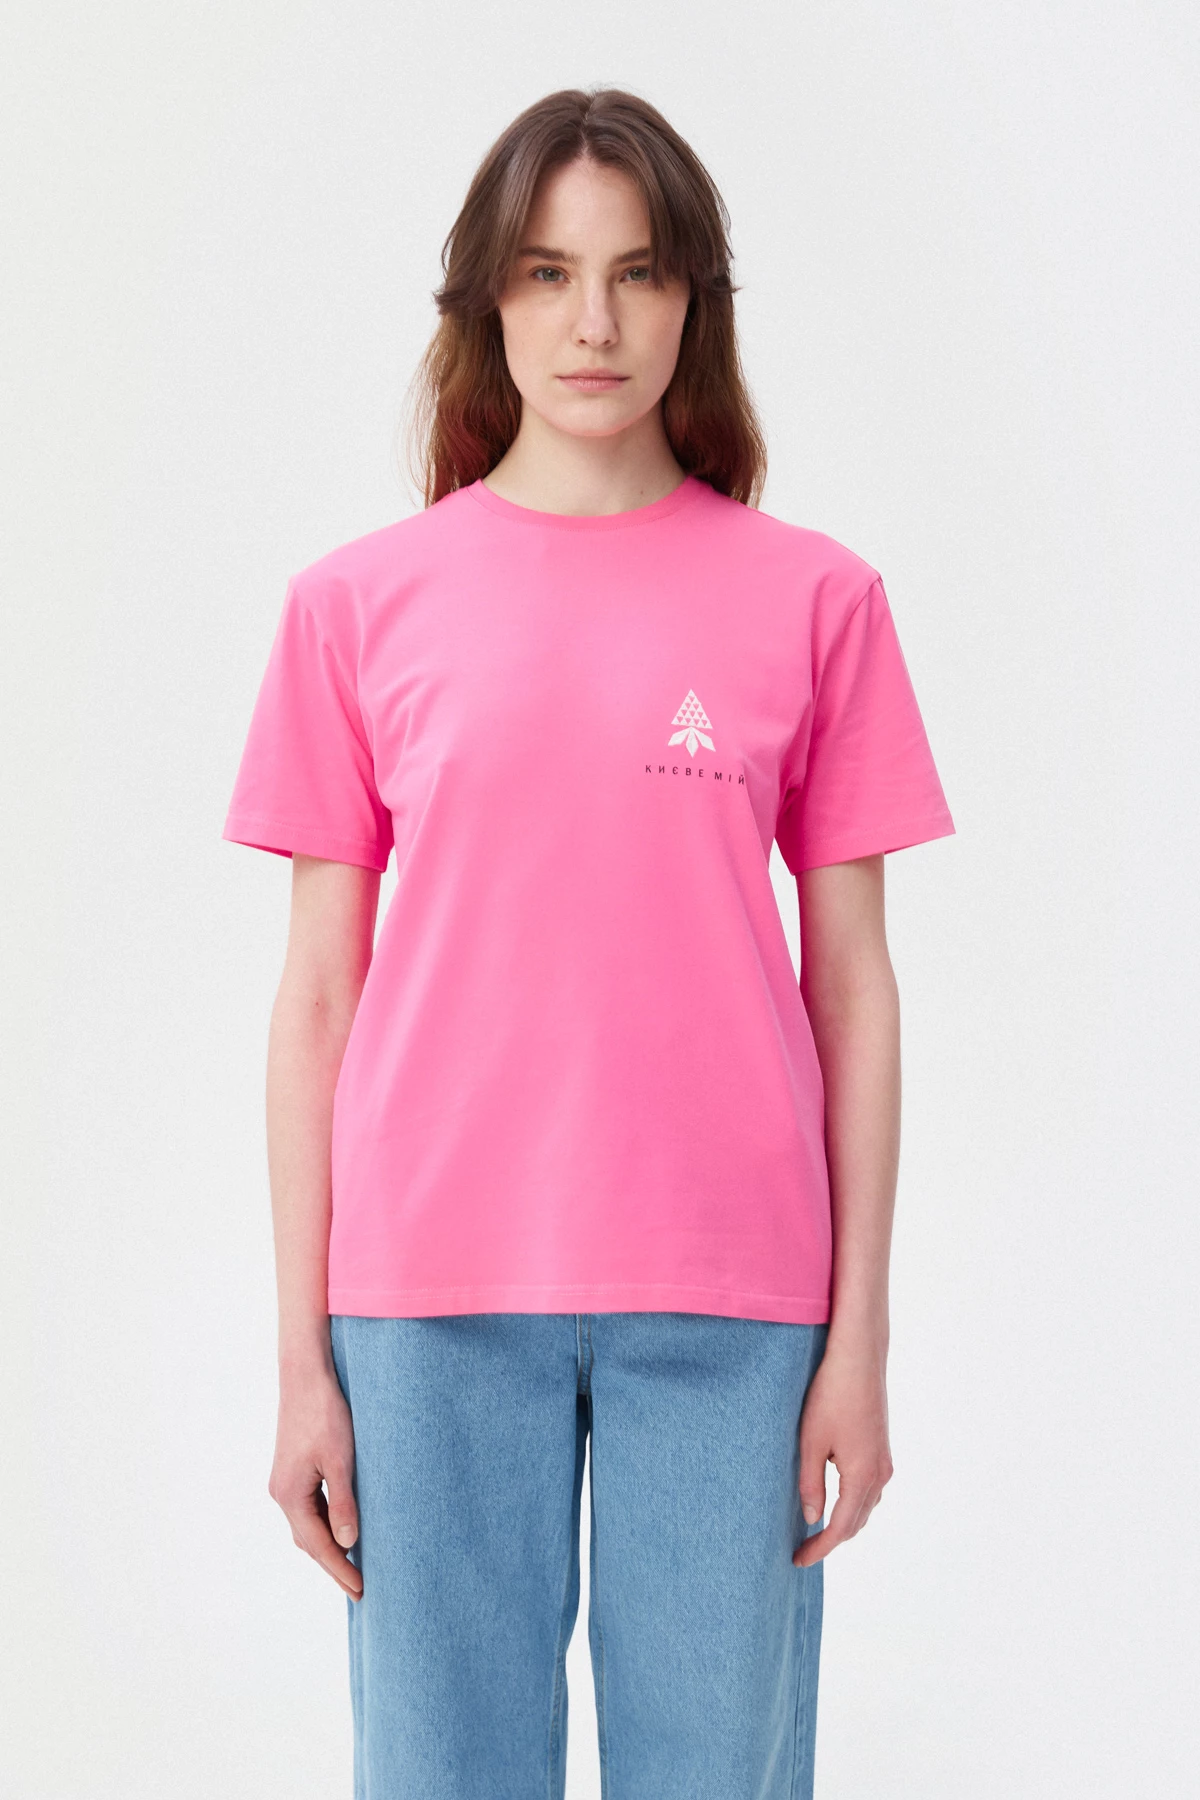 Pink cotton T-shirt "Chestnut", photo 1